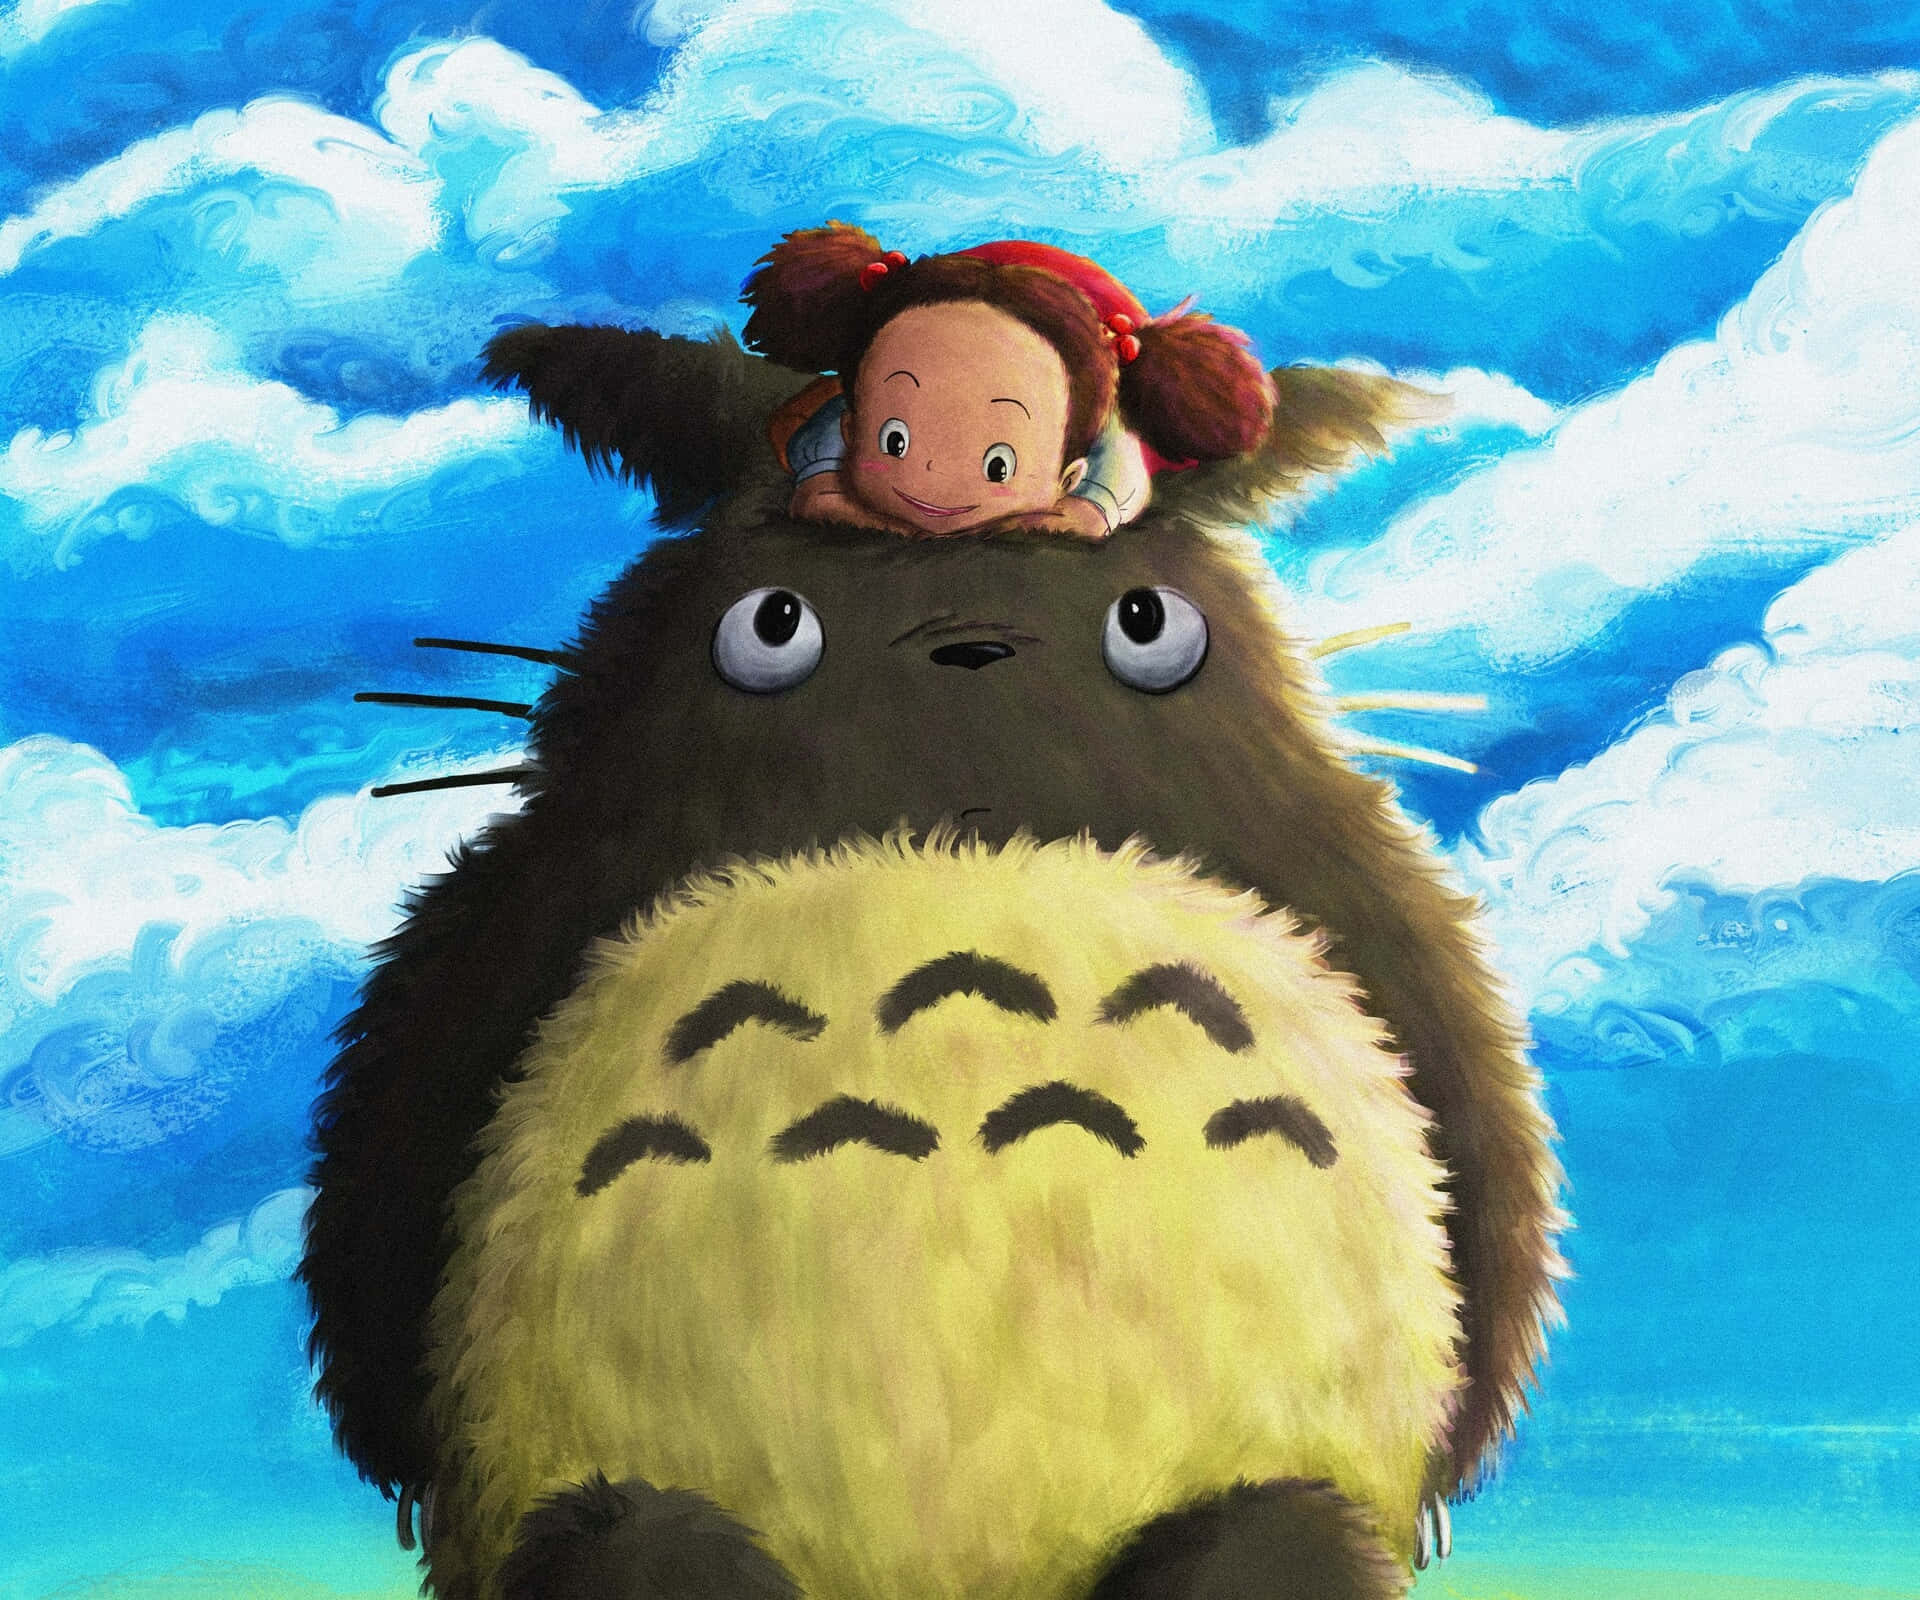 Totoro and Mei enjoying the countryside in "My Neighbor Totoro" Wallpaper